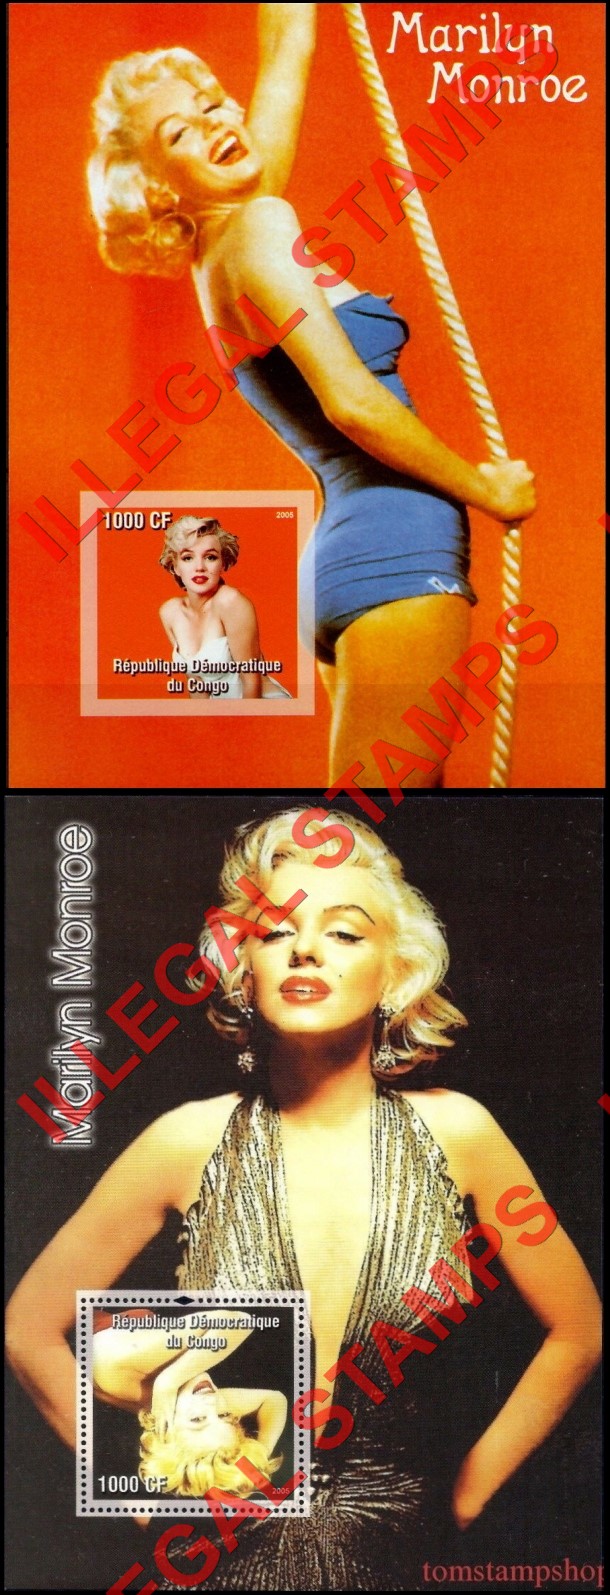 Congo Democratic Republic 2005 Marilyn Monroe Illegal Stamp Souvenir Sheets of 1 (Part 2)